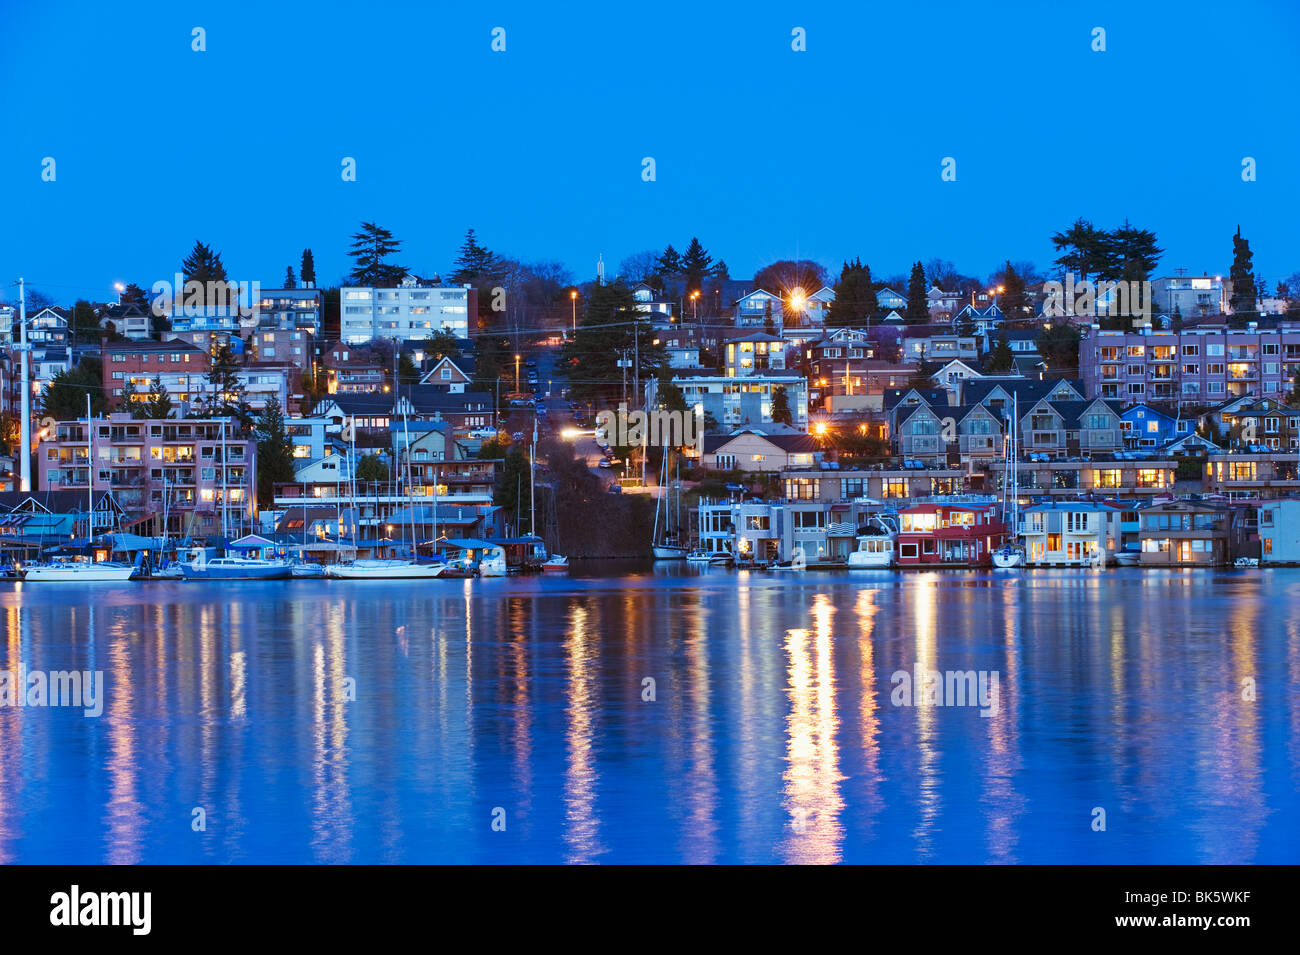 Wohnhäuser am Lake Union, Seattle, Bundesstaat Washington, Vereinigte Staaten von Amerika, Nordamerika Stockfoto